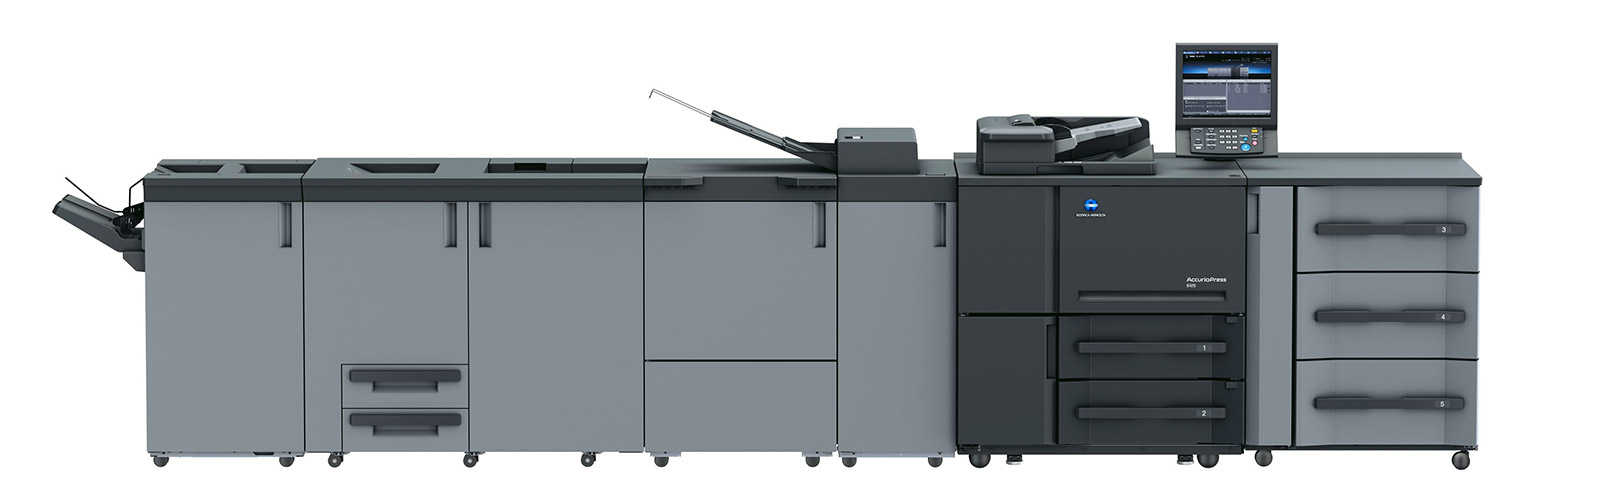 Konica Minolta AccurioPress 6120 Production Print System